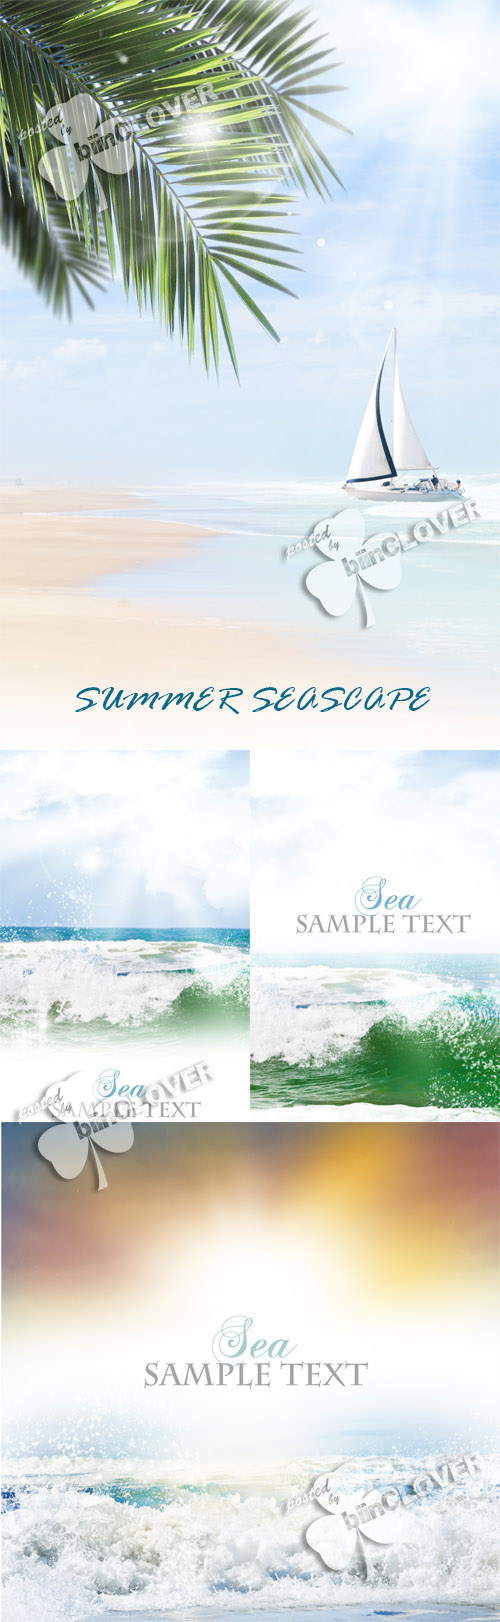 Summer seascape 0196